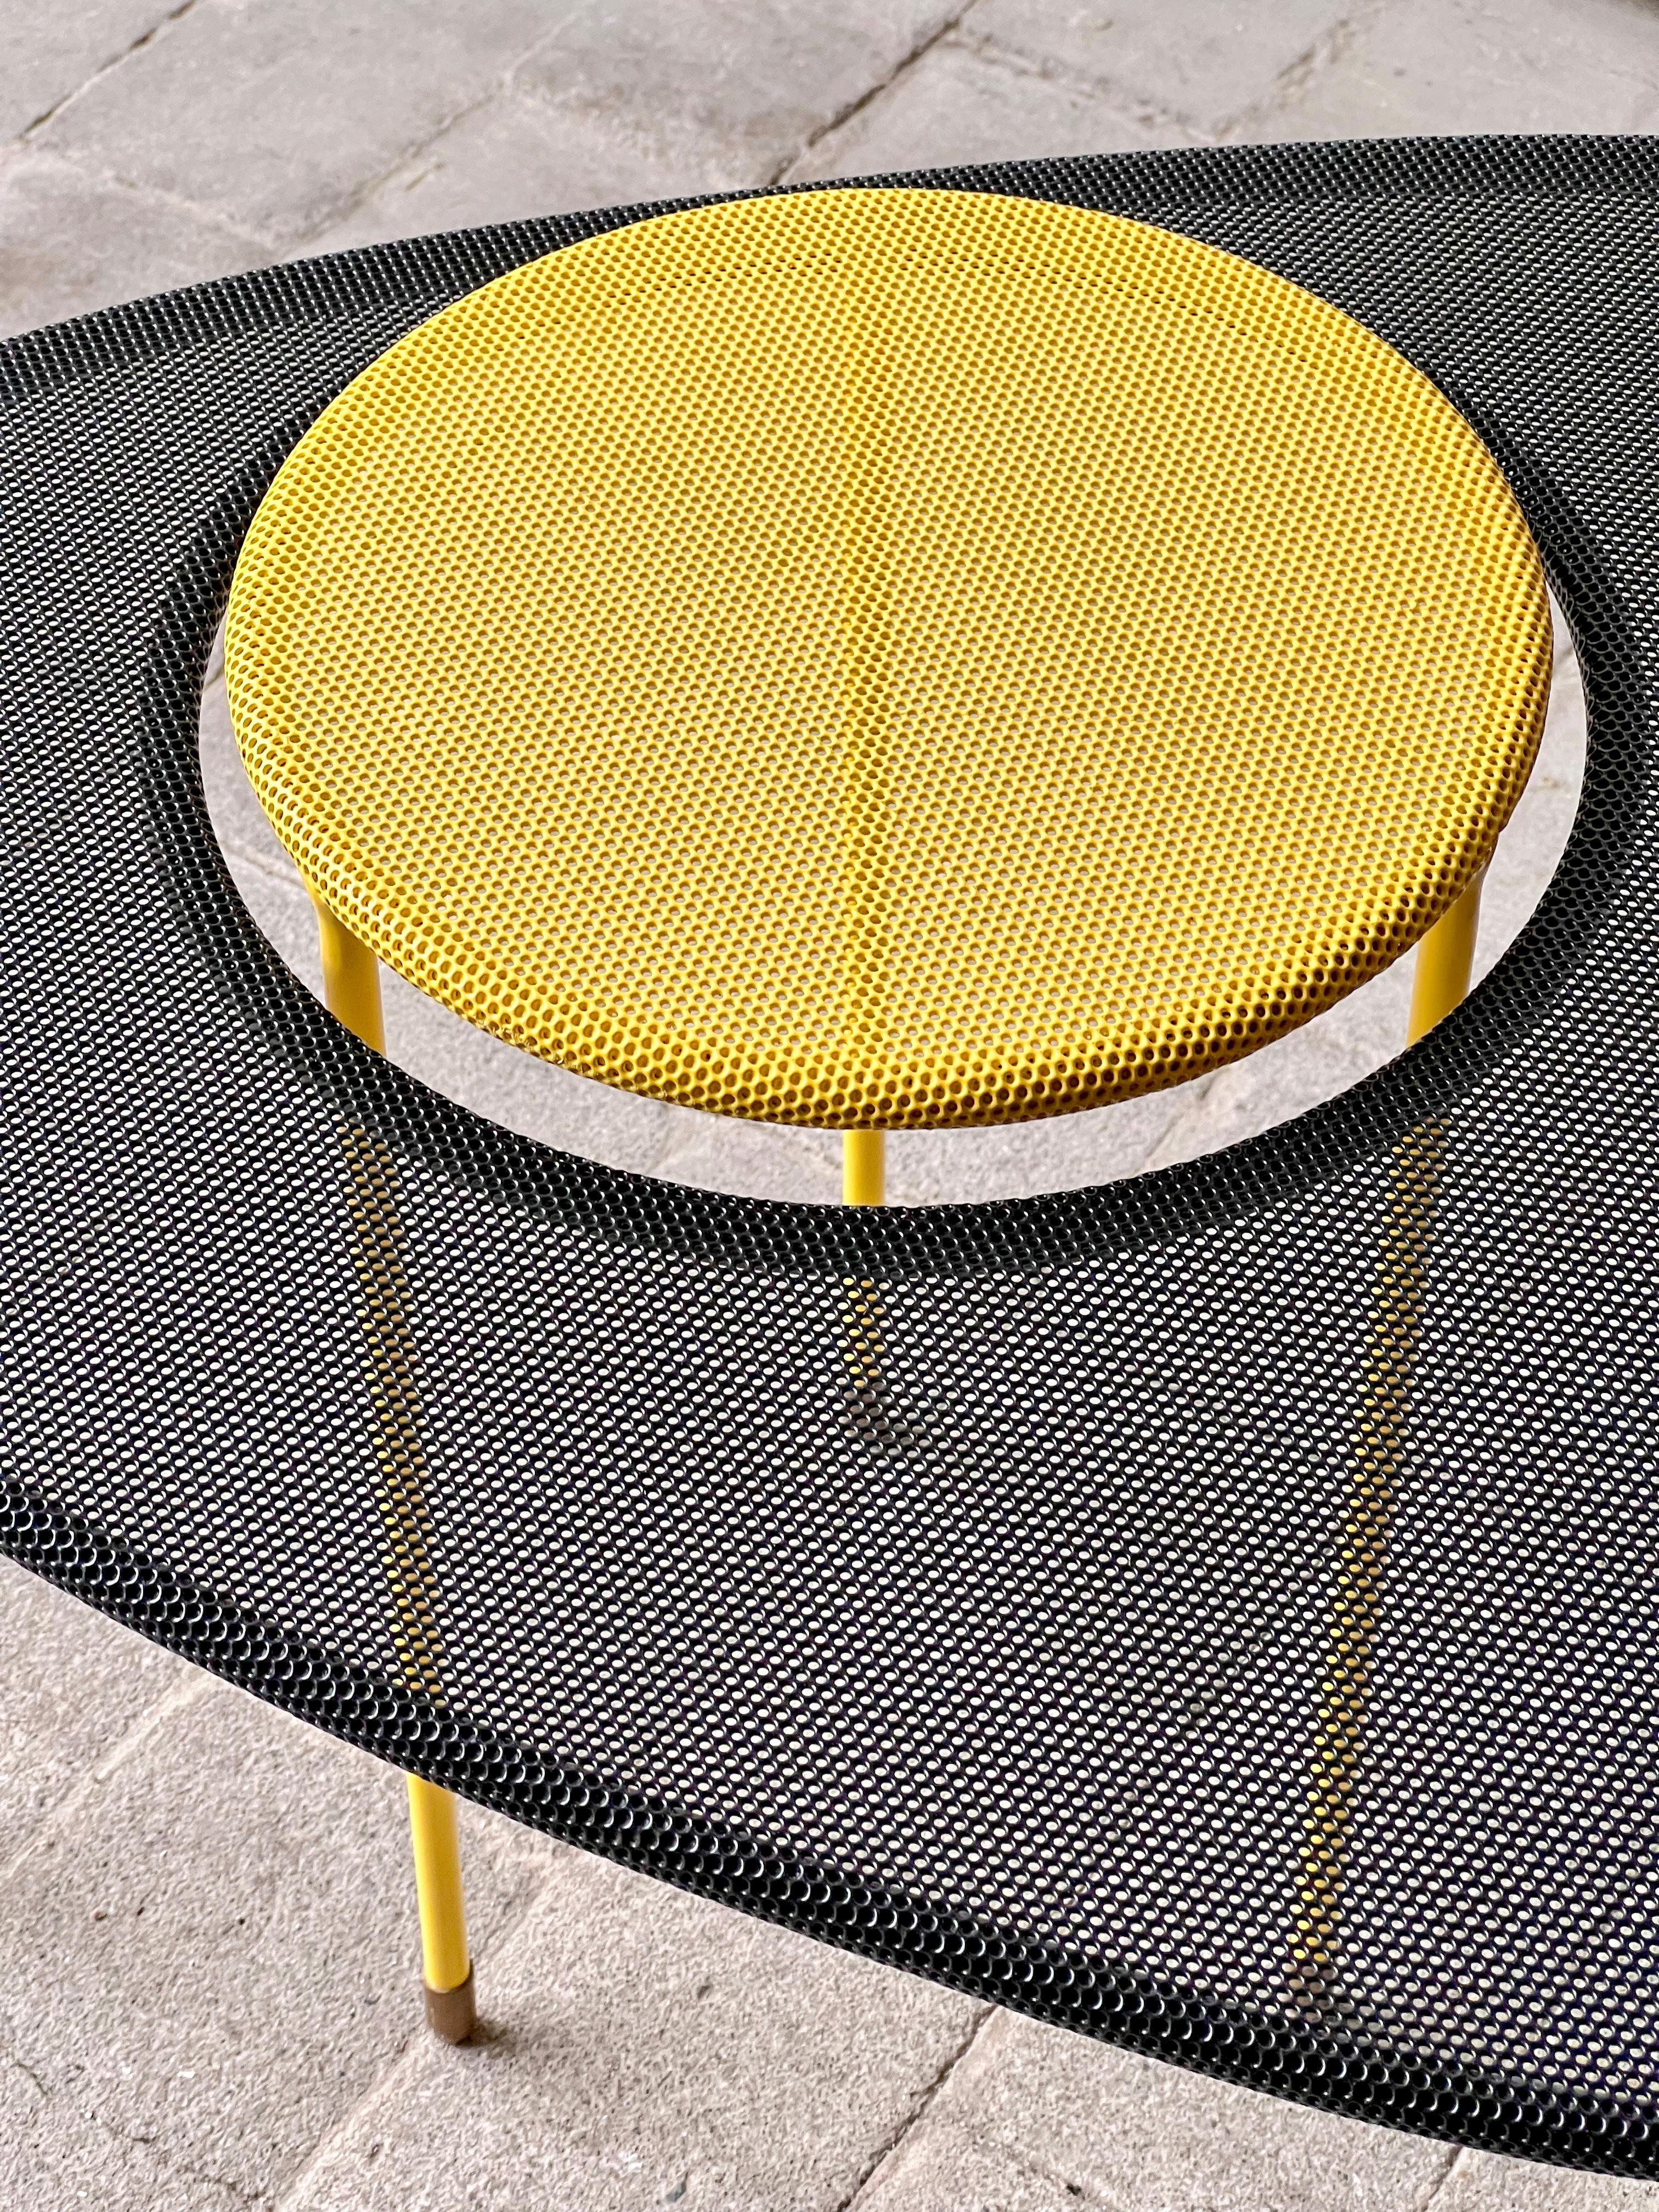 Mid-Century Modern Mathieu Mategot Kangaroo side tables, set of two in black & yellow, for Gubi